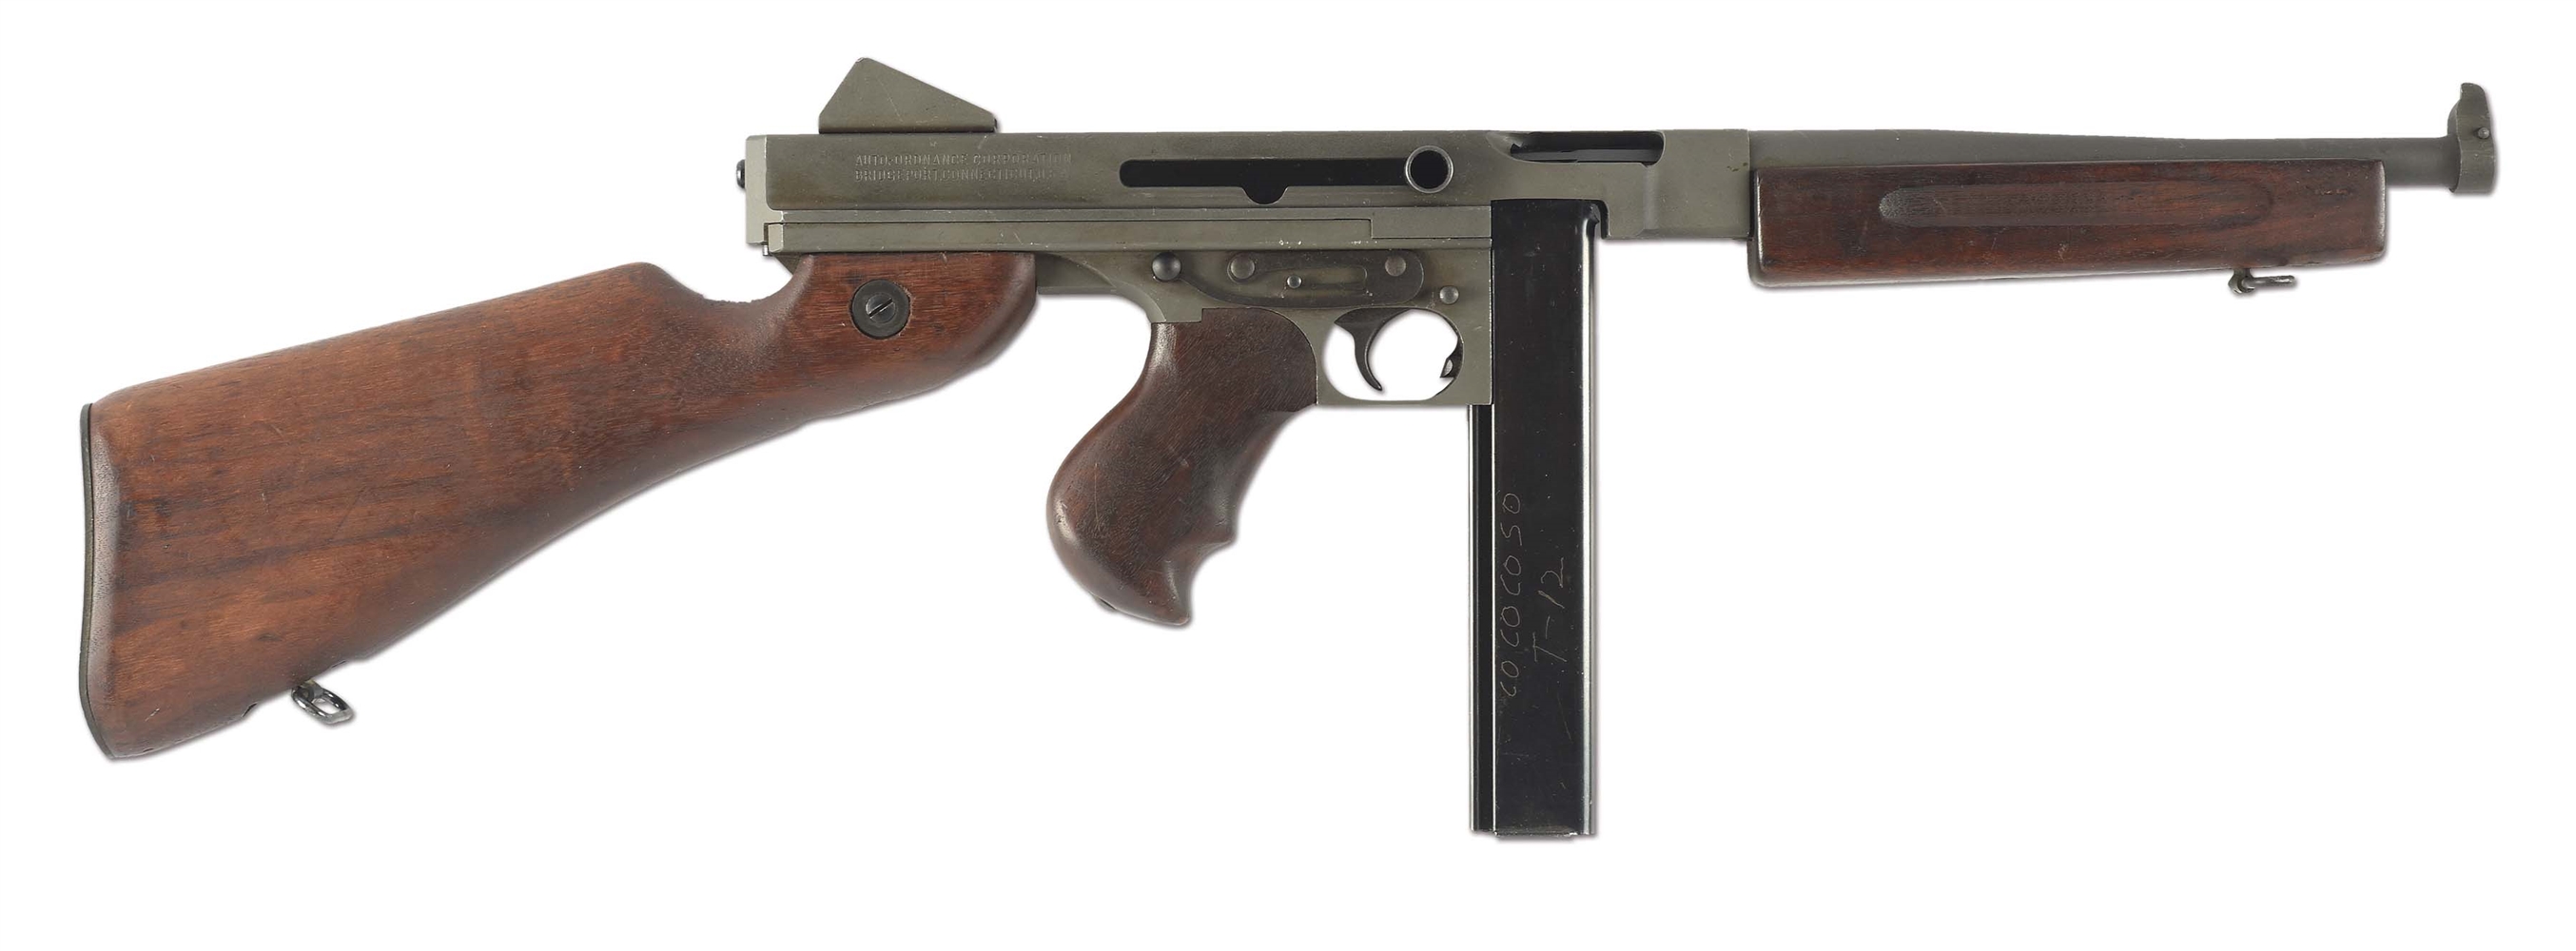 (N) CLASSIC U.S. MILITARY WORLD WAR II AUTO ORDNANCE THOMPSON M1A1 MACHINE GUN (PRE-86 DEALER SAMPLE).